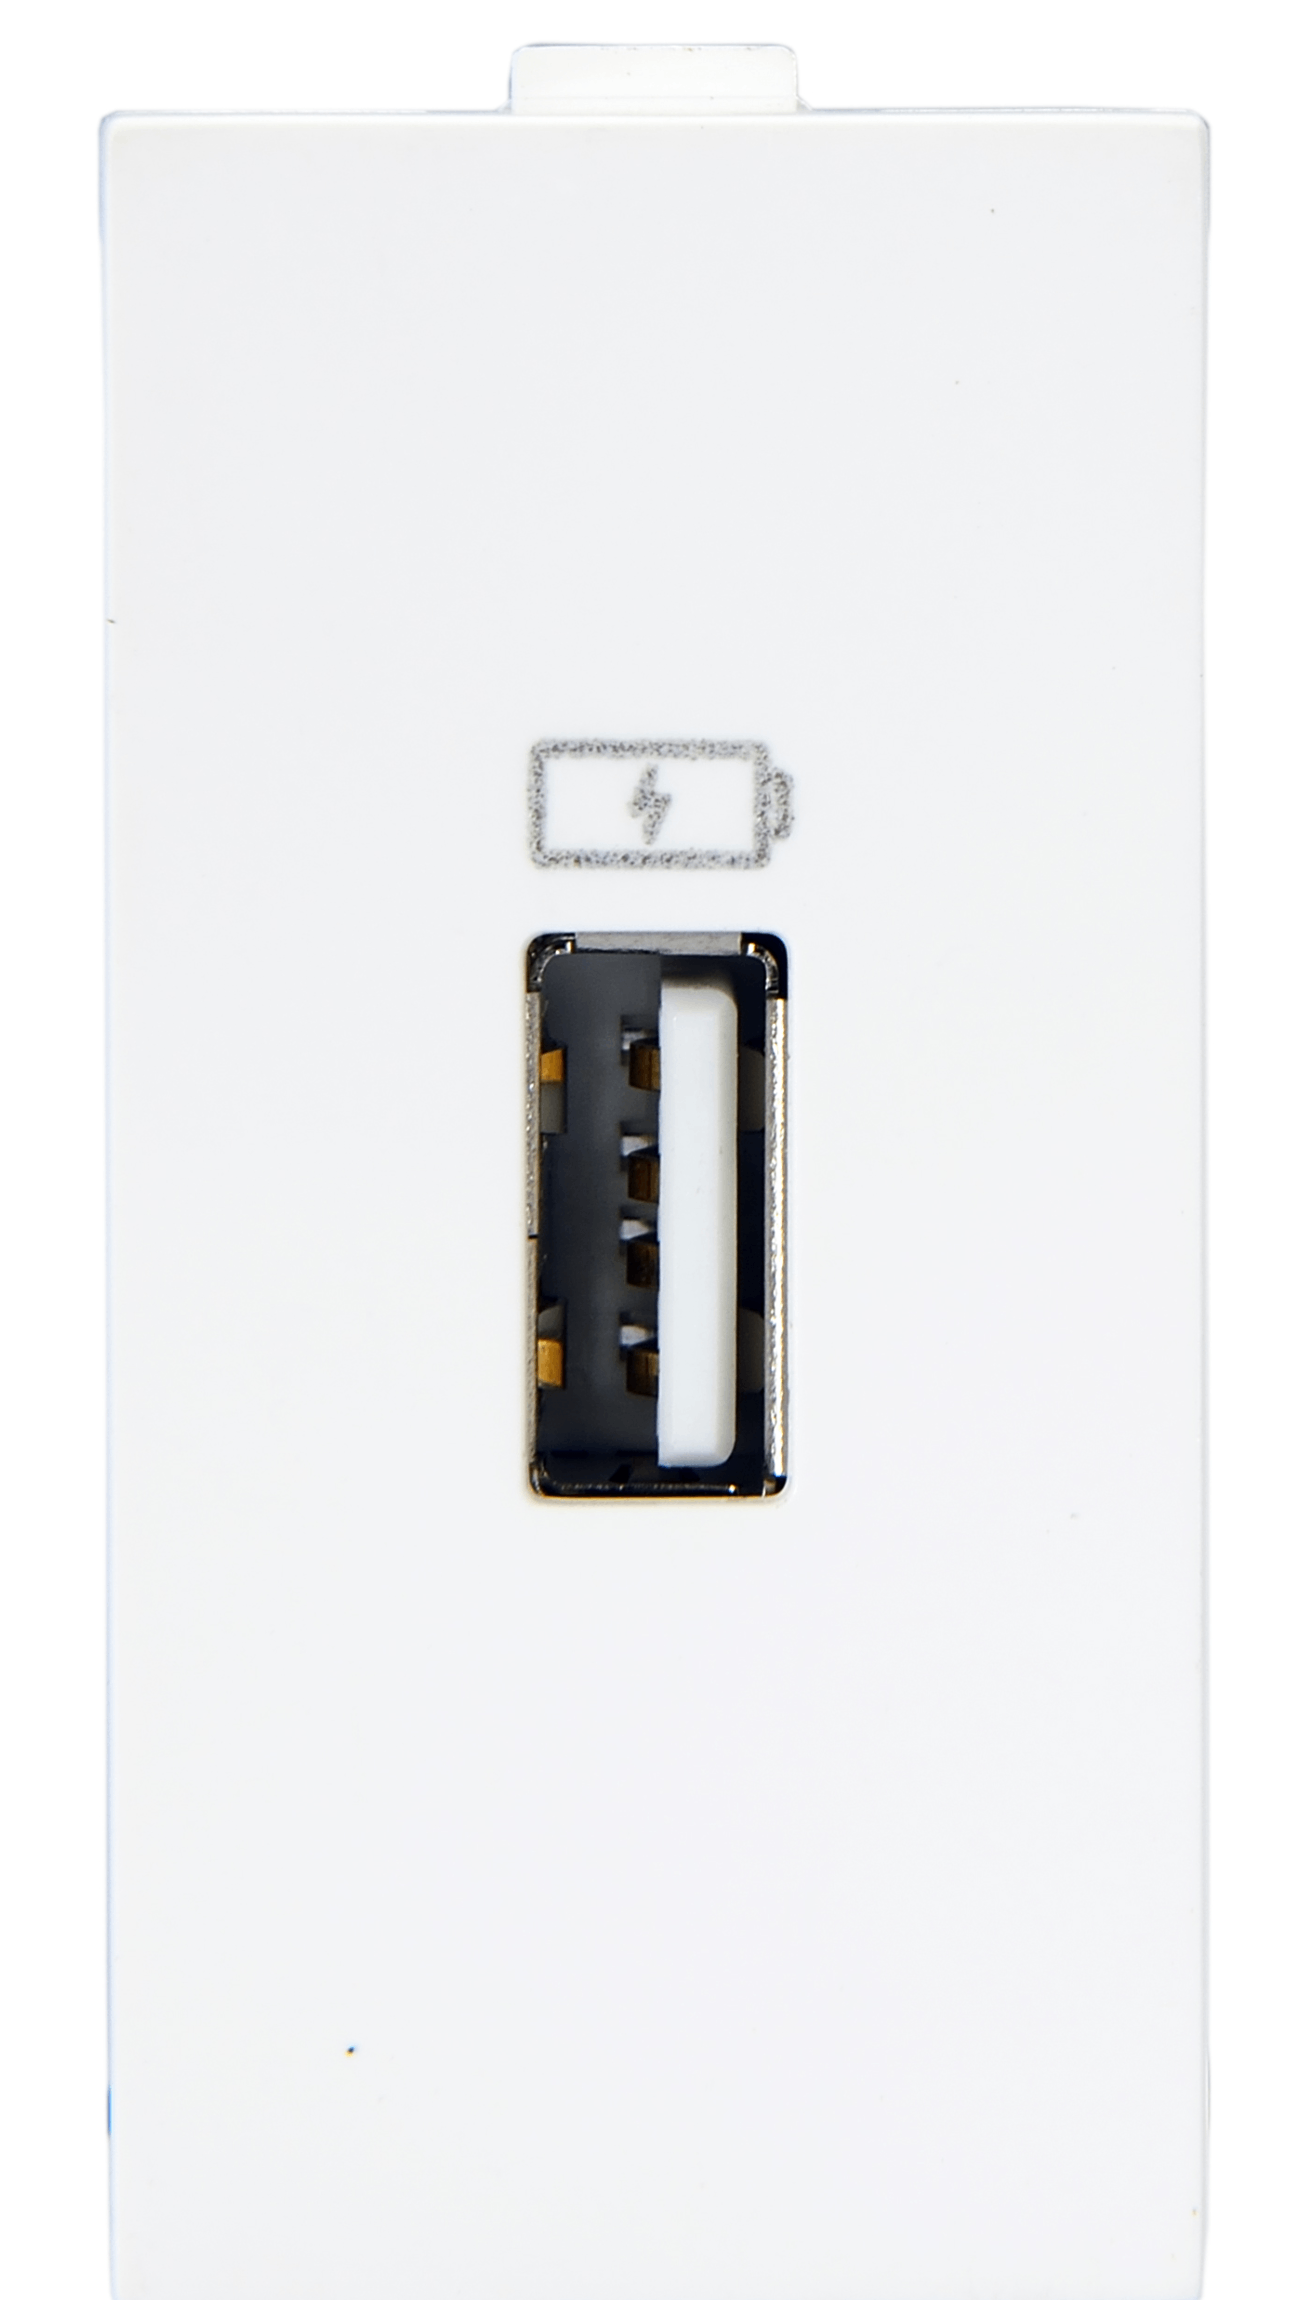 USB Socket Charger - Buy USB 1 Module Wall Socket